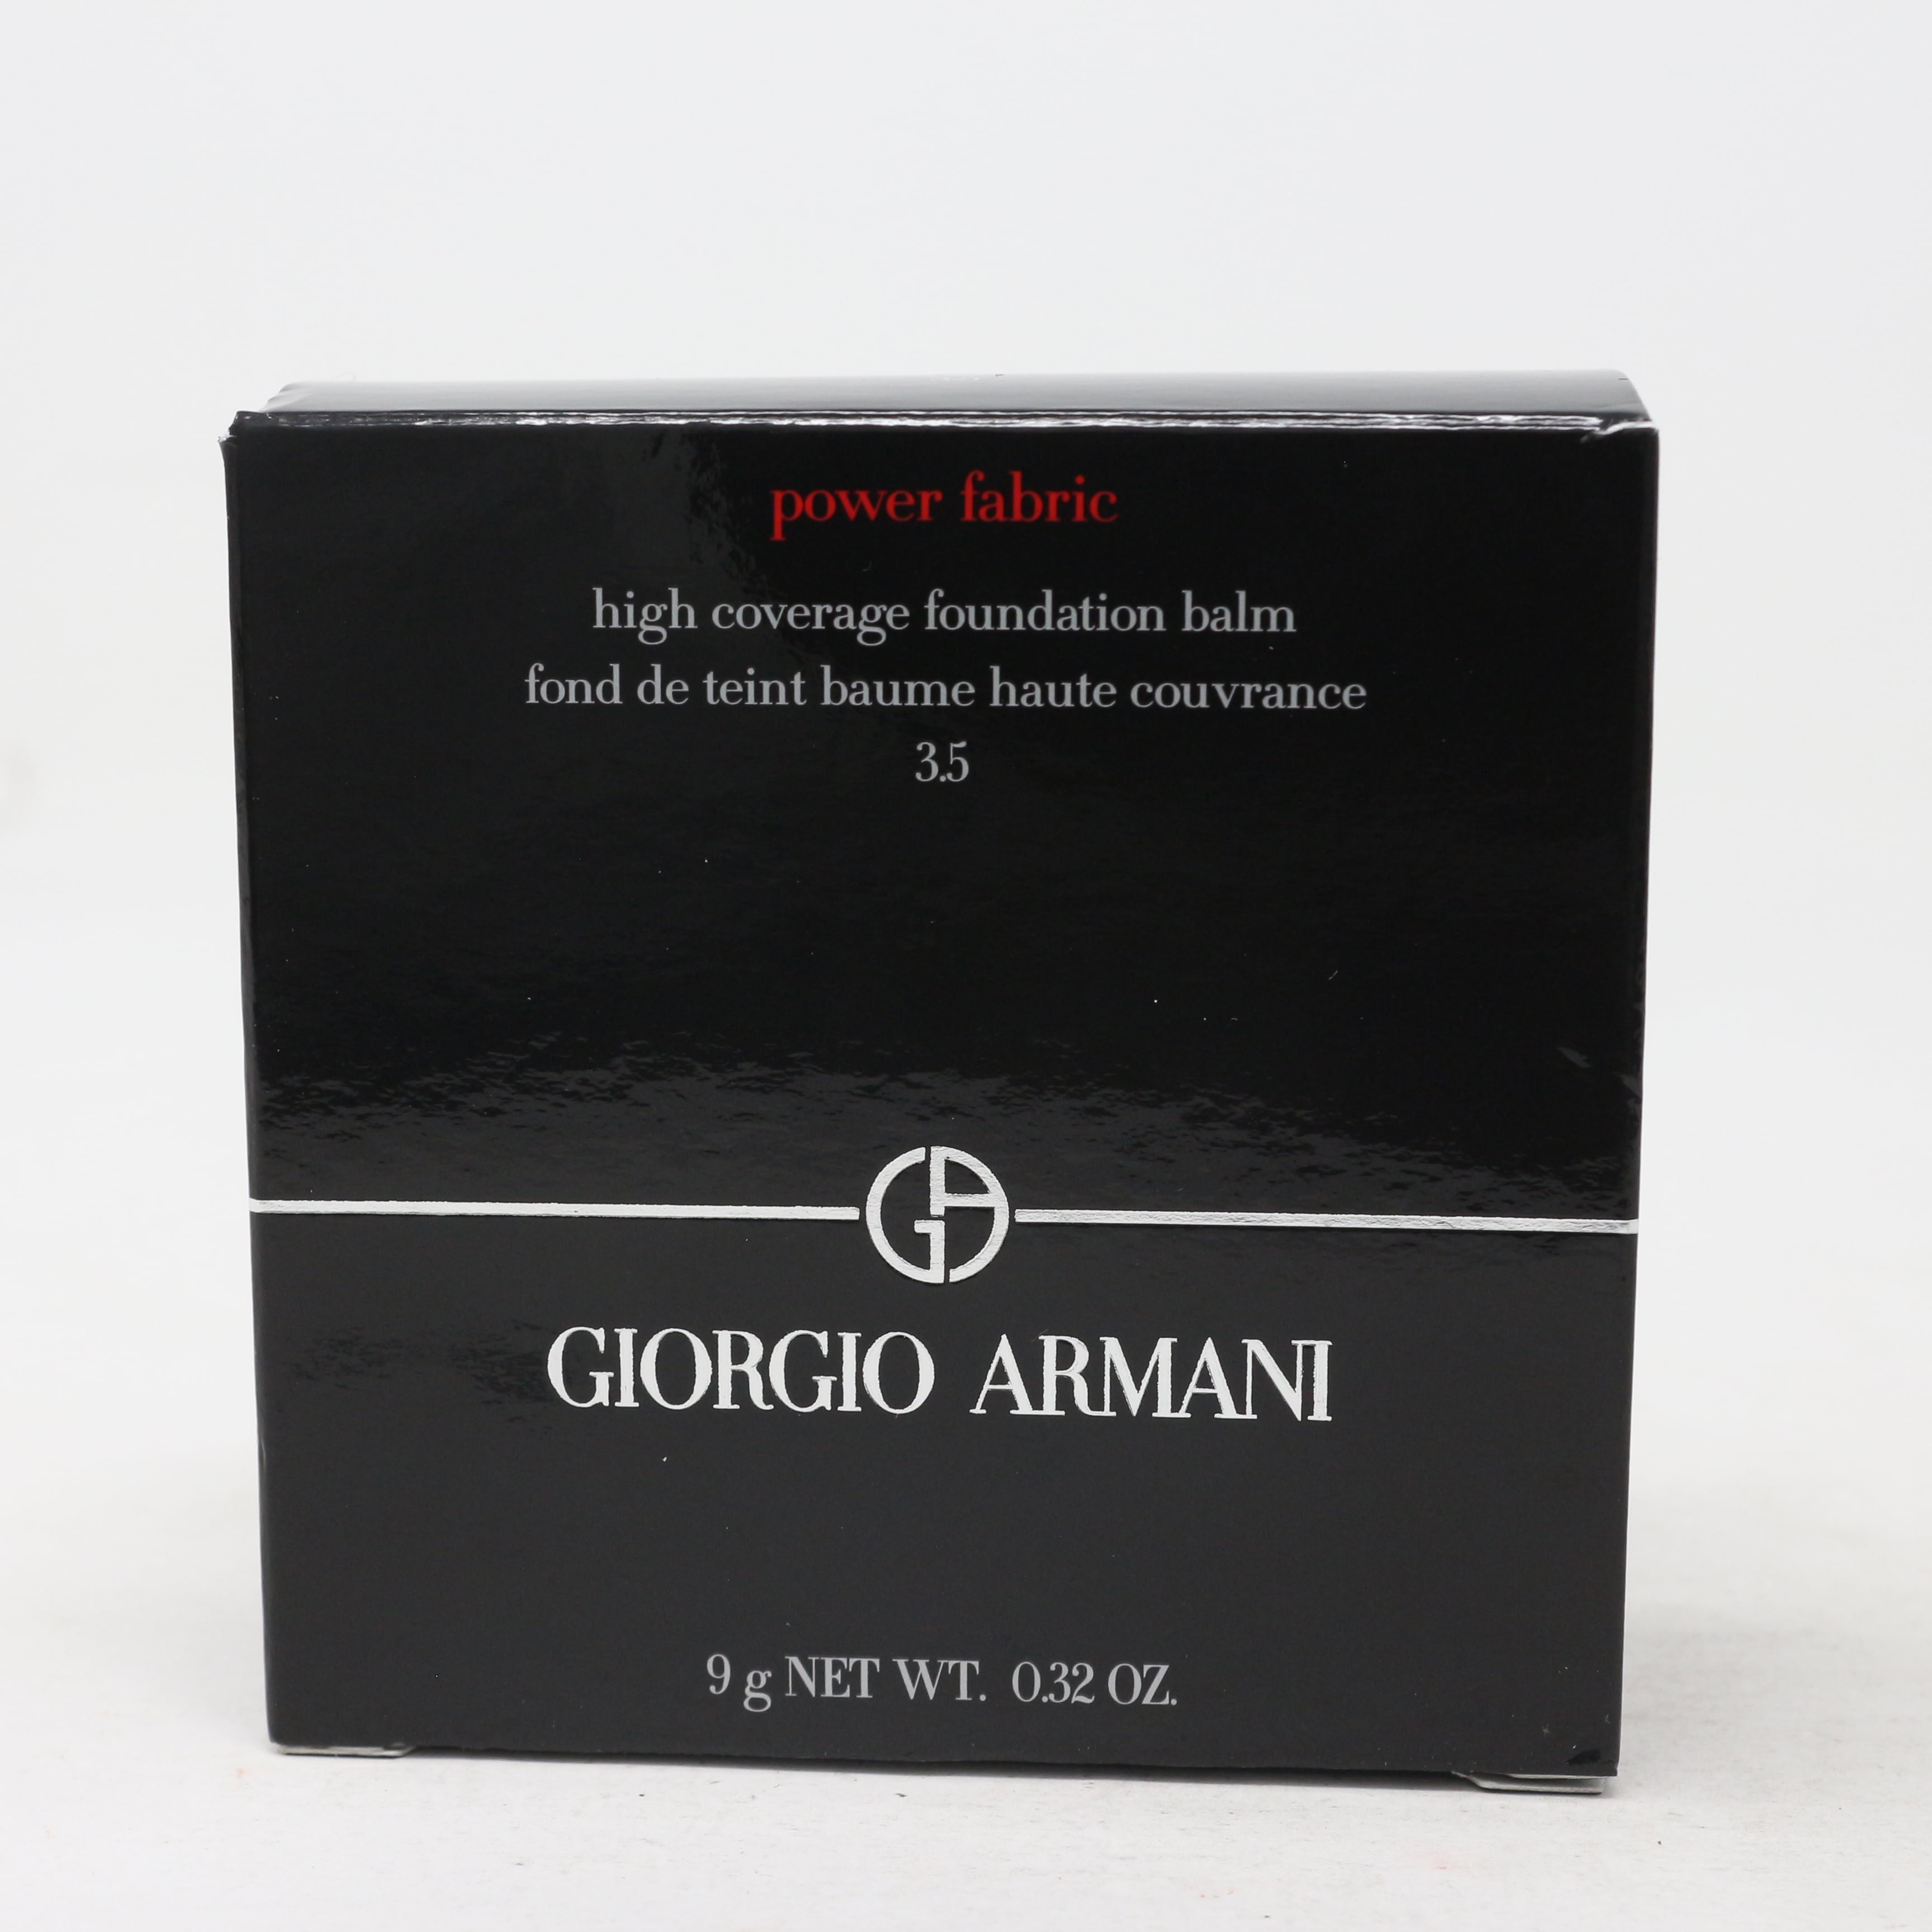 giorgio armani high coverage foundation balm